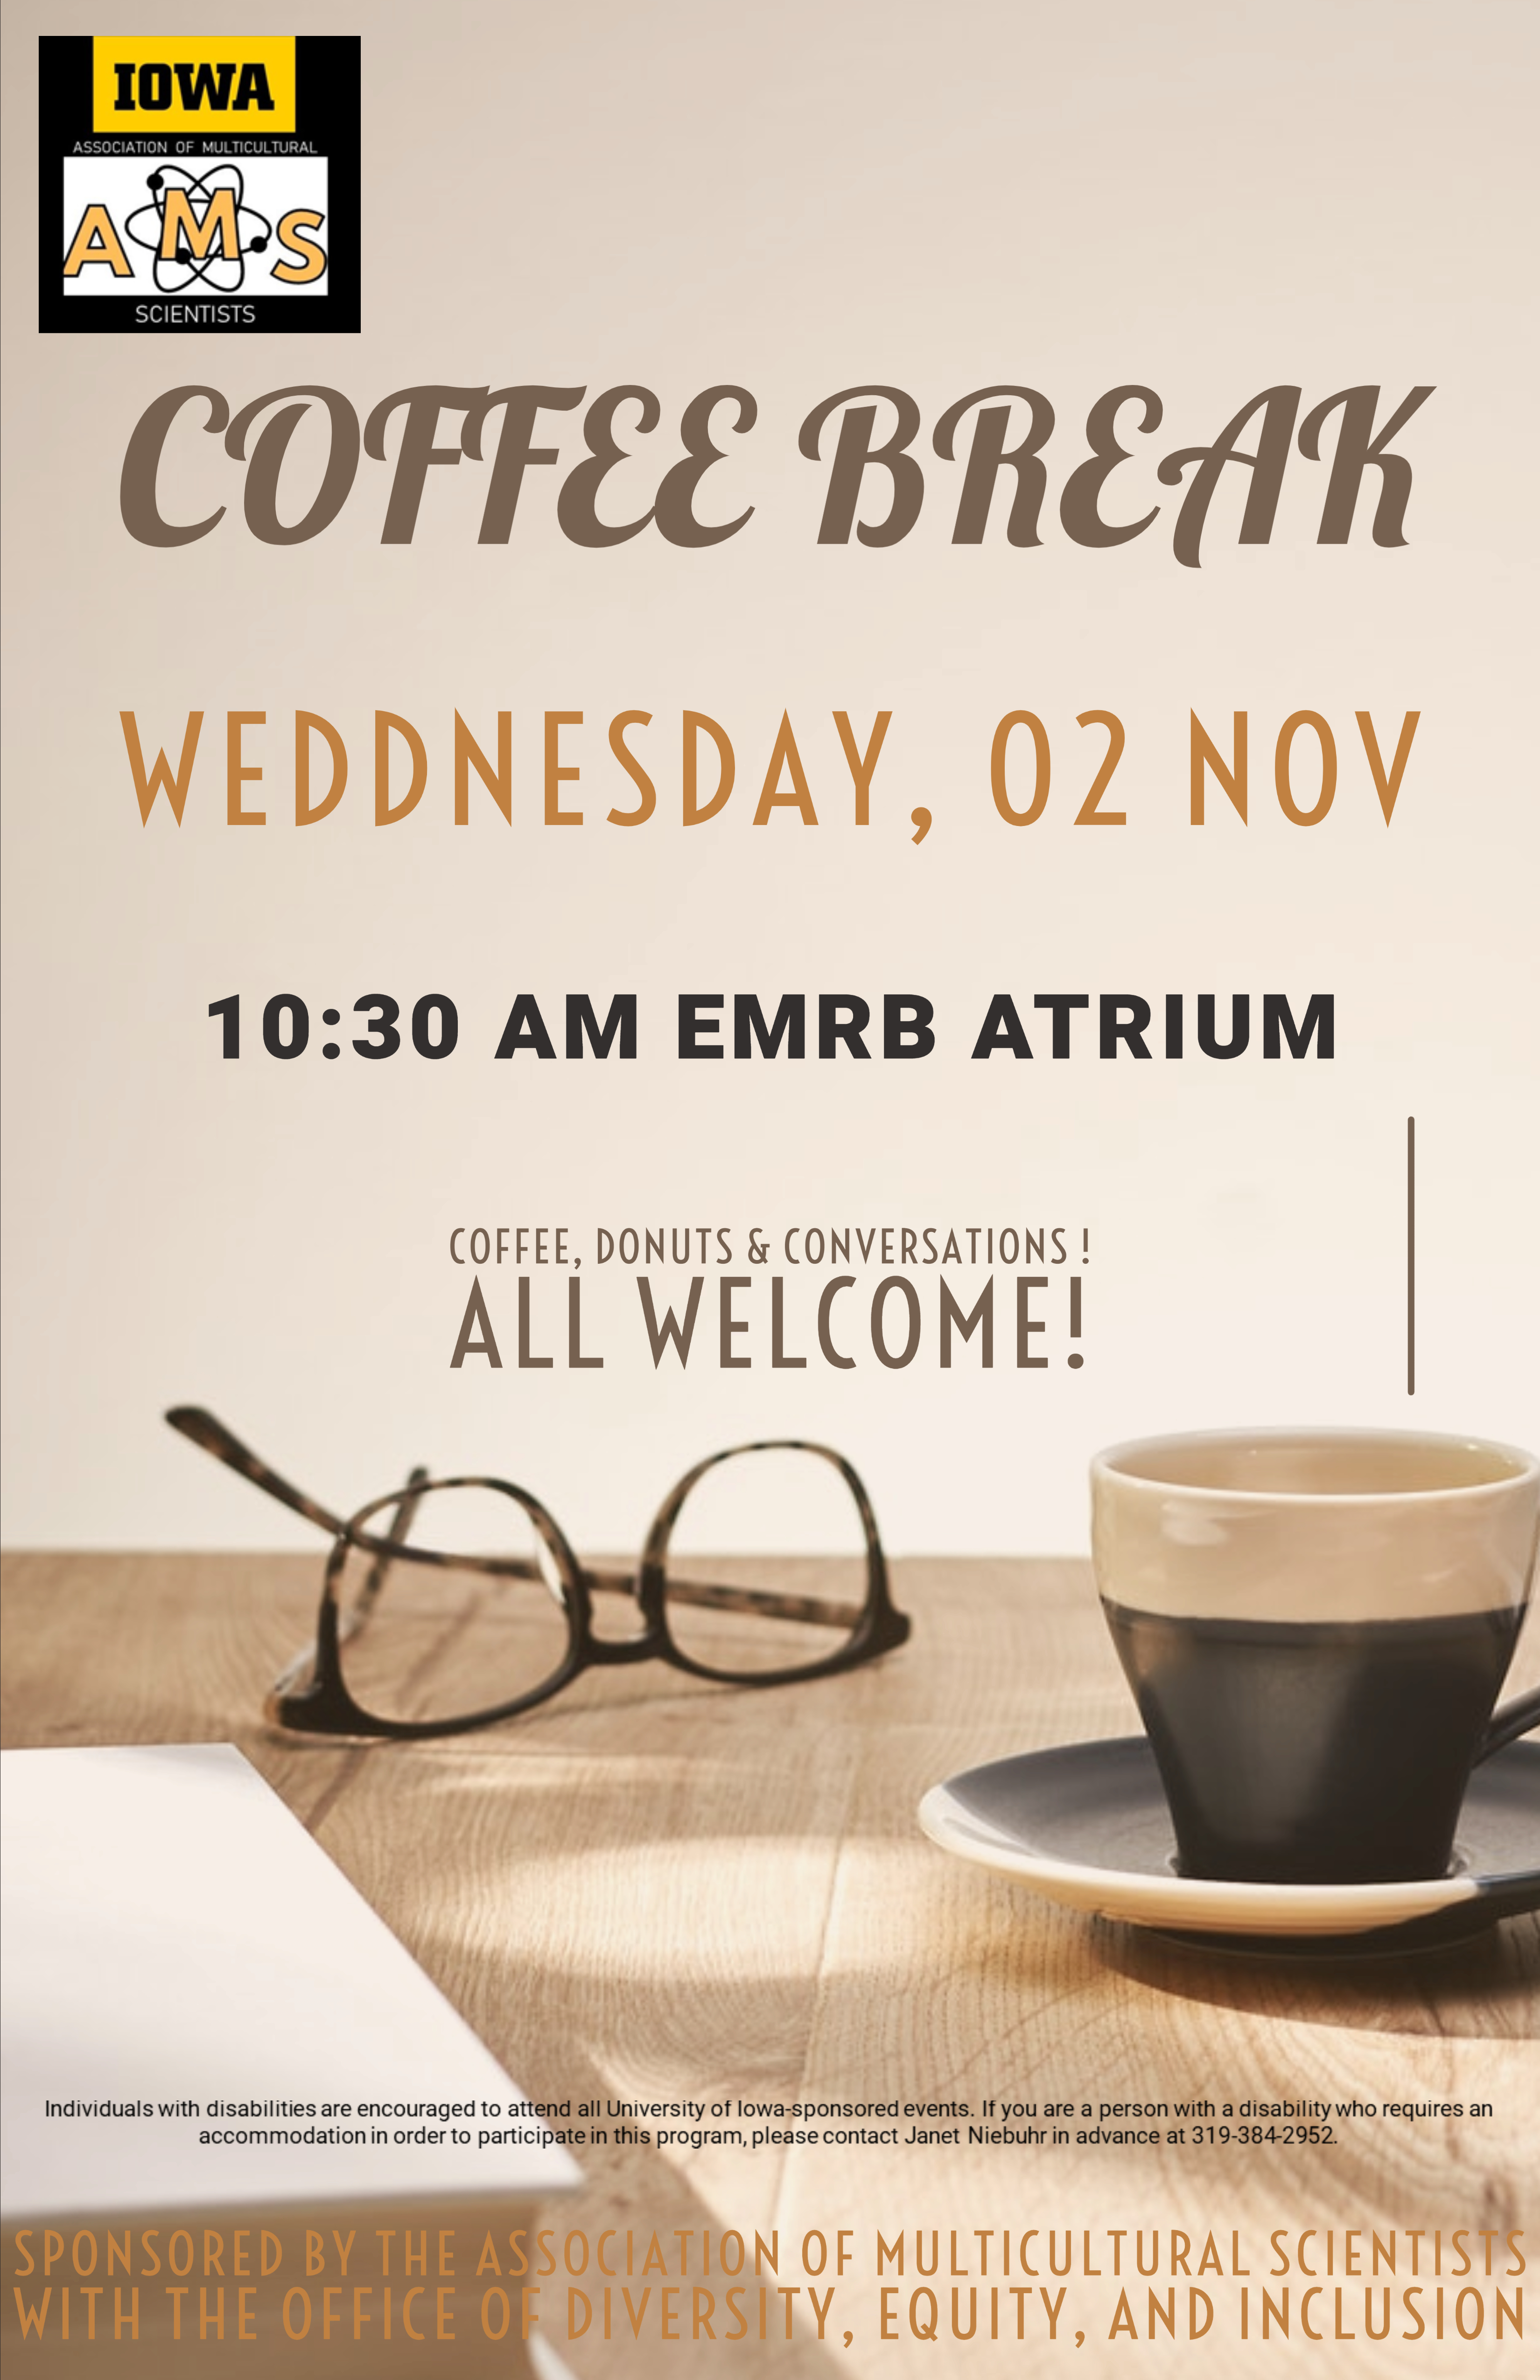 Coffee Break promotional image